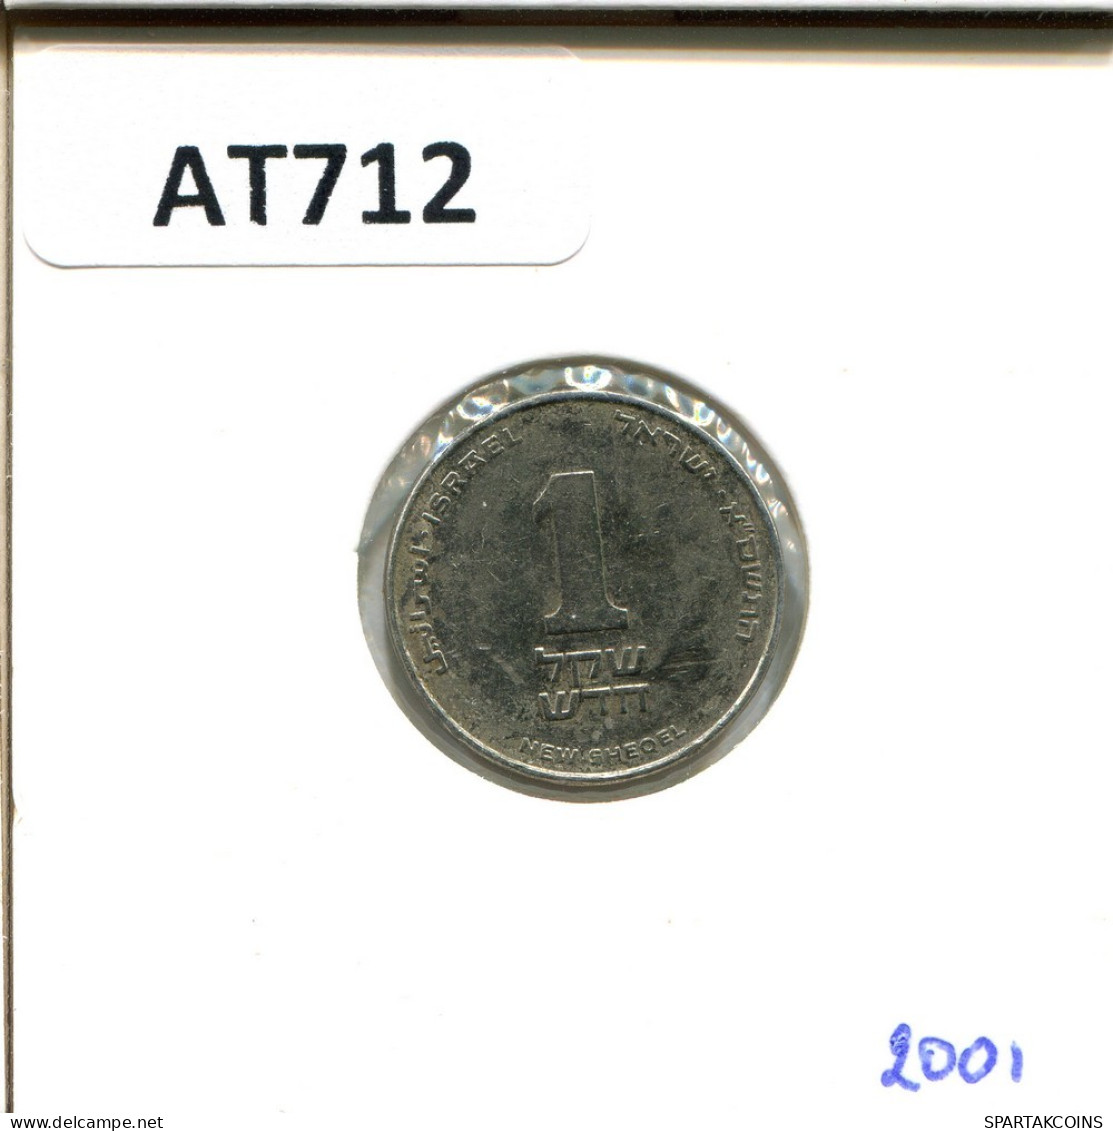 1 NEW SHEQEL 2001 ISRAEL Coin #AT712.U.A - Israele